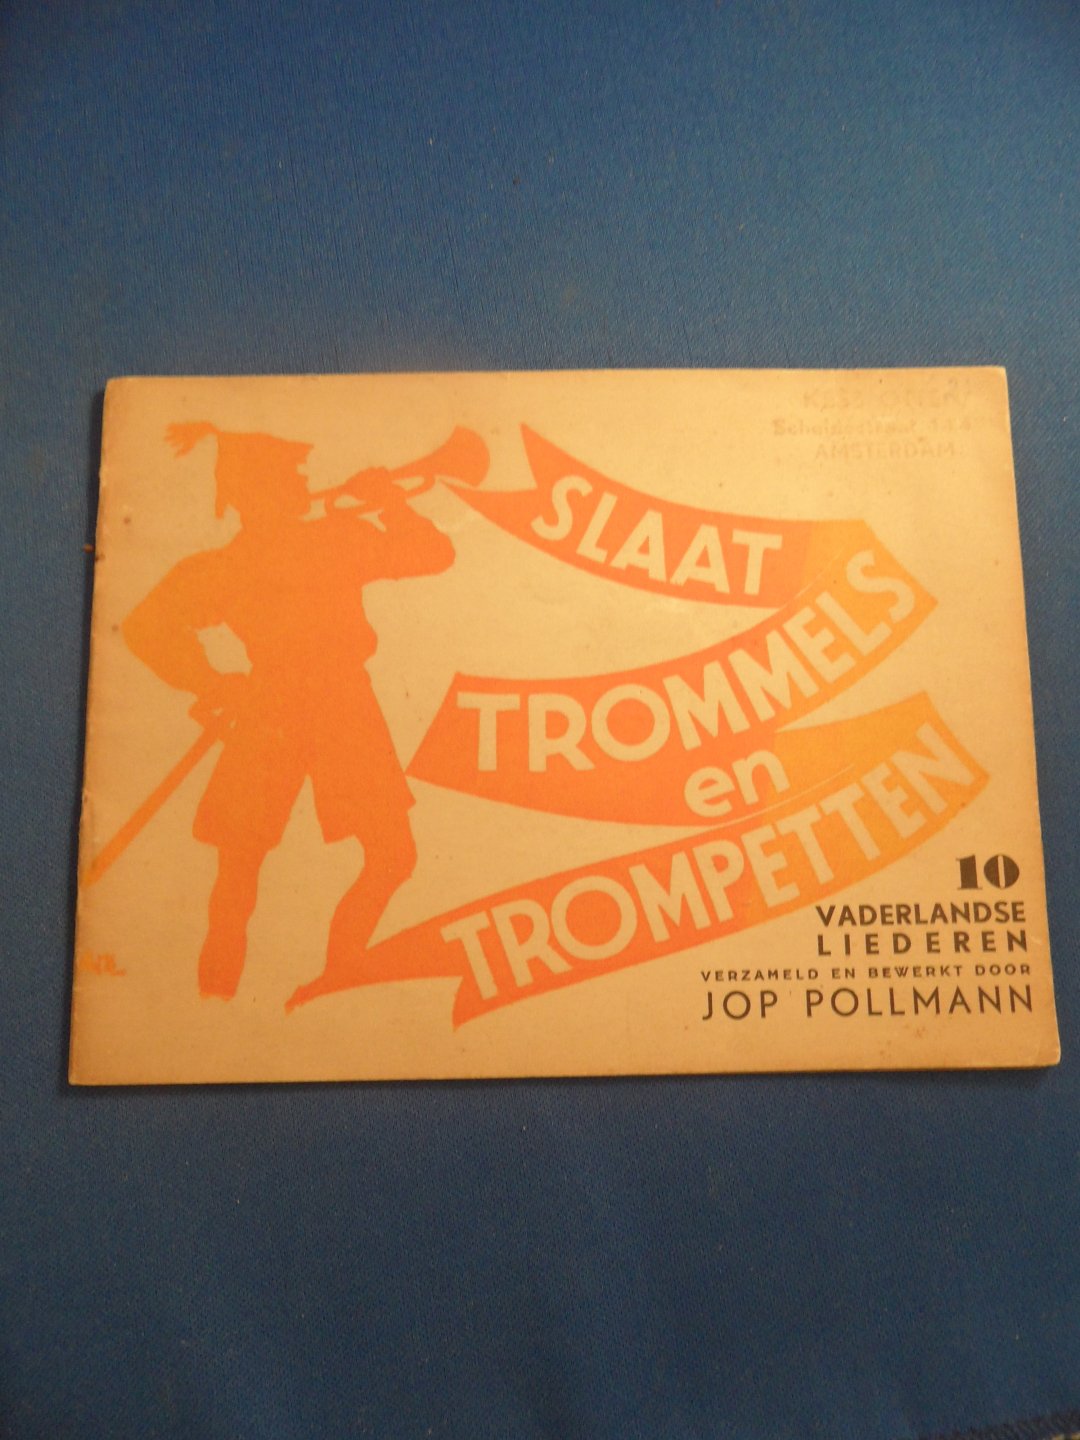 Pollmann, Jop - Slaat trommels en trompetten, 10 vaderlandse liederen